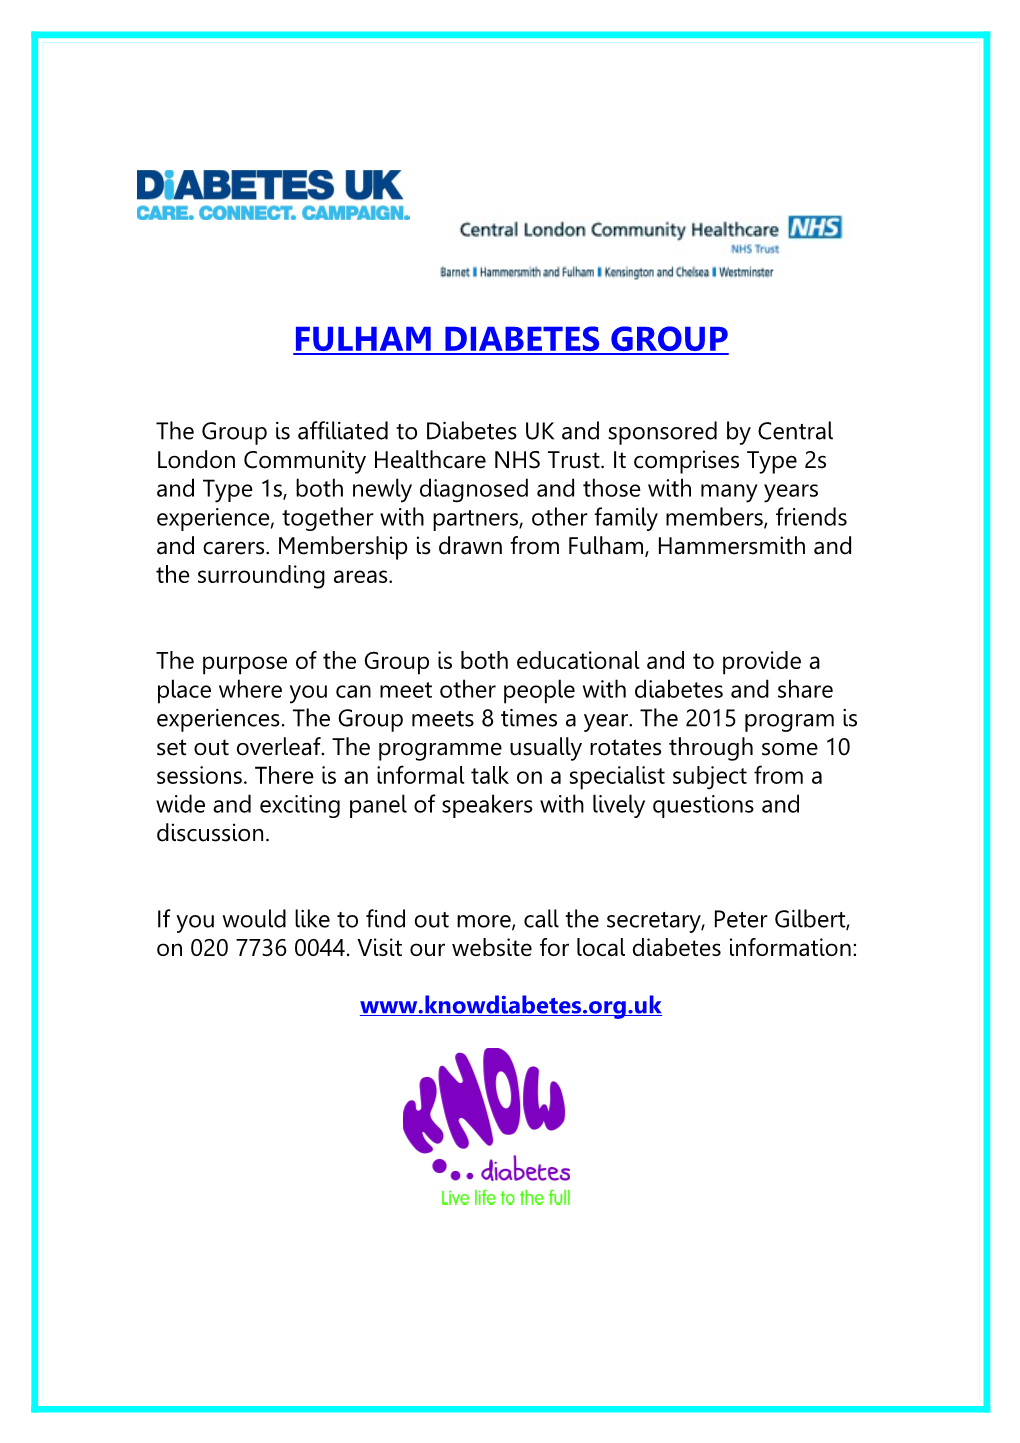 Fulham Diabetes Group